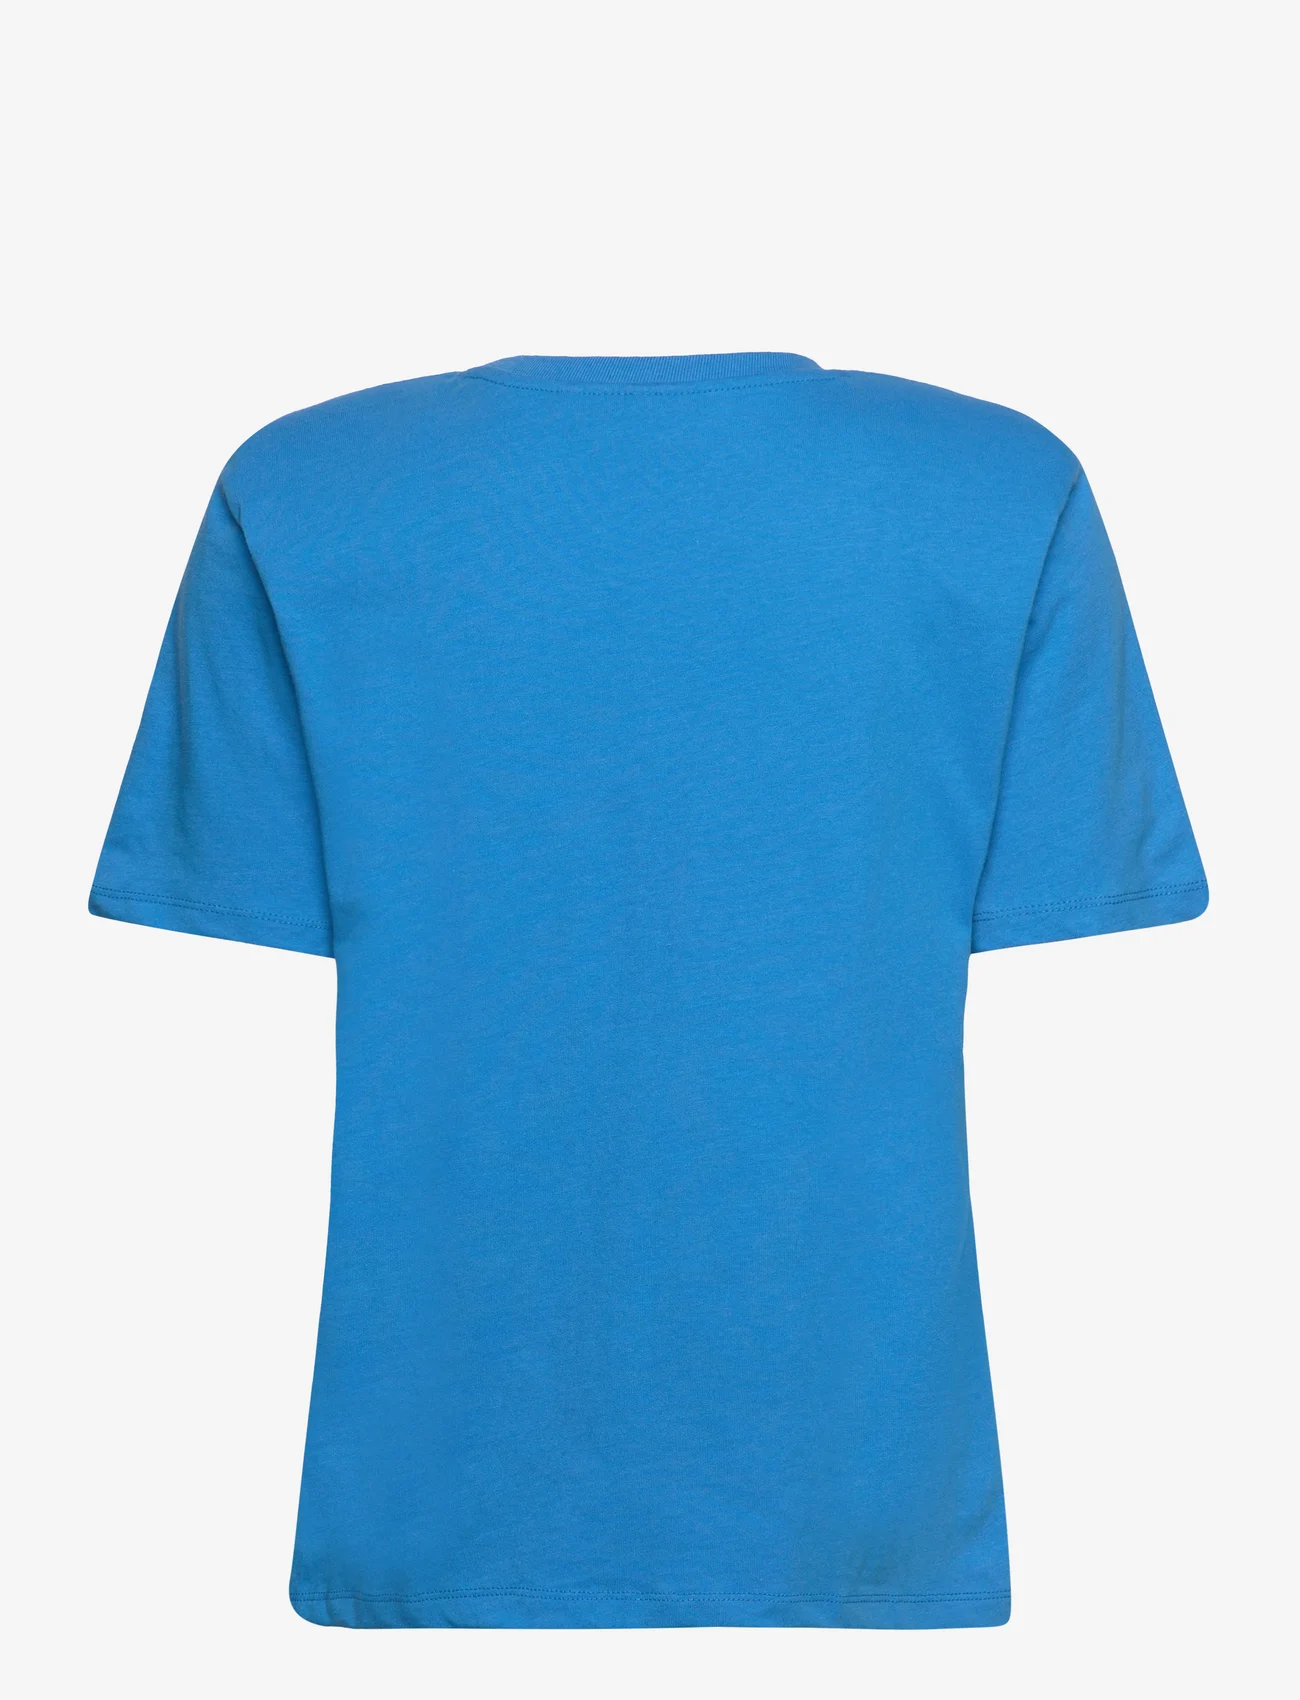 Gestuz - JoryGZ tee - t-shirts & tops - malibu blue - 1